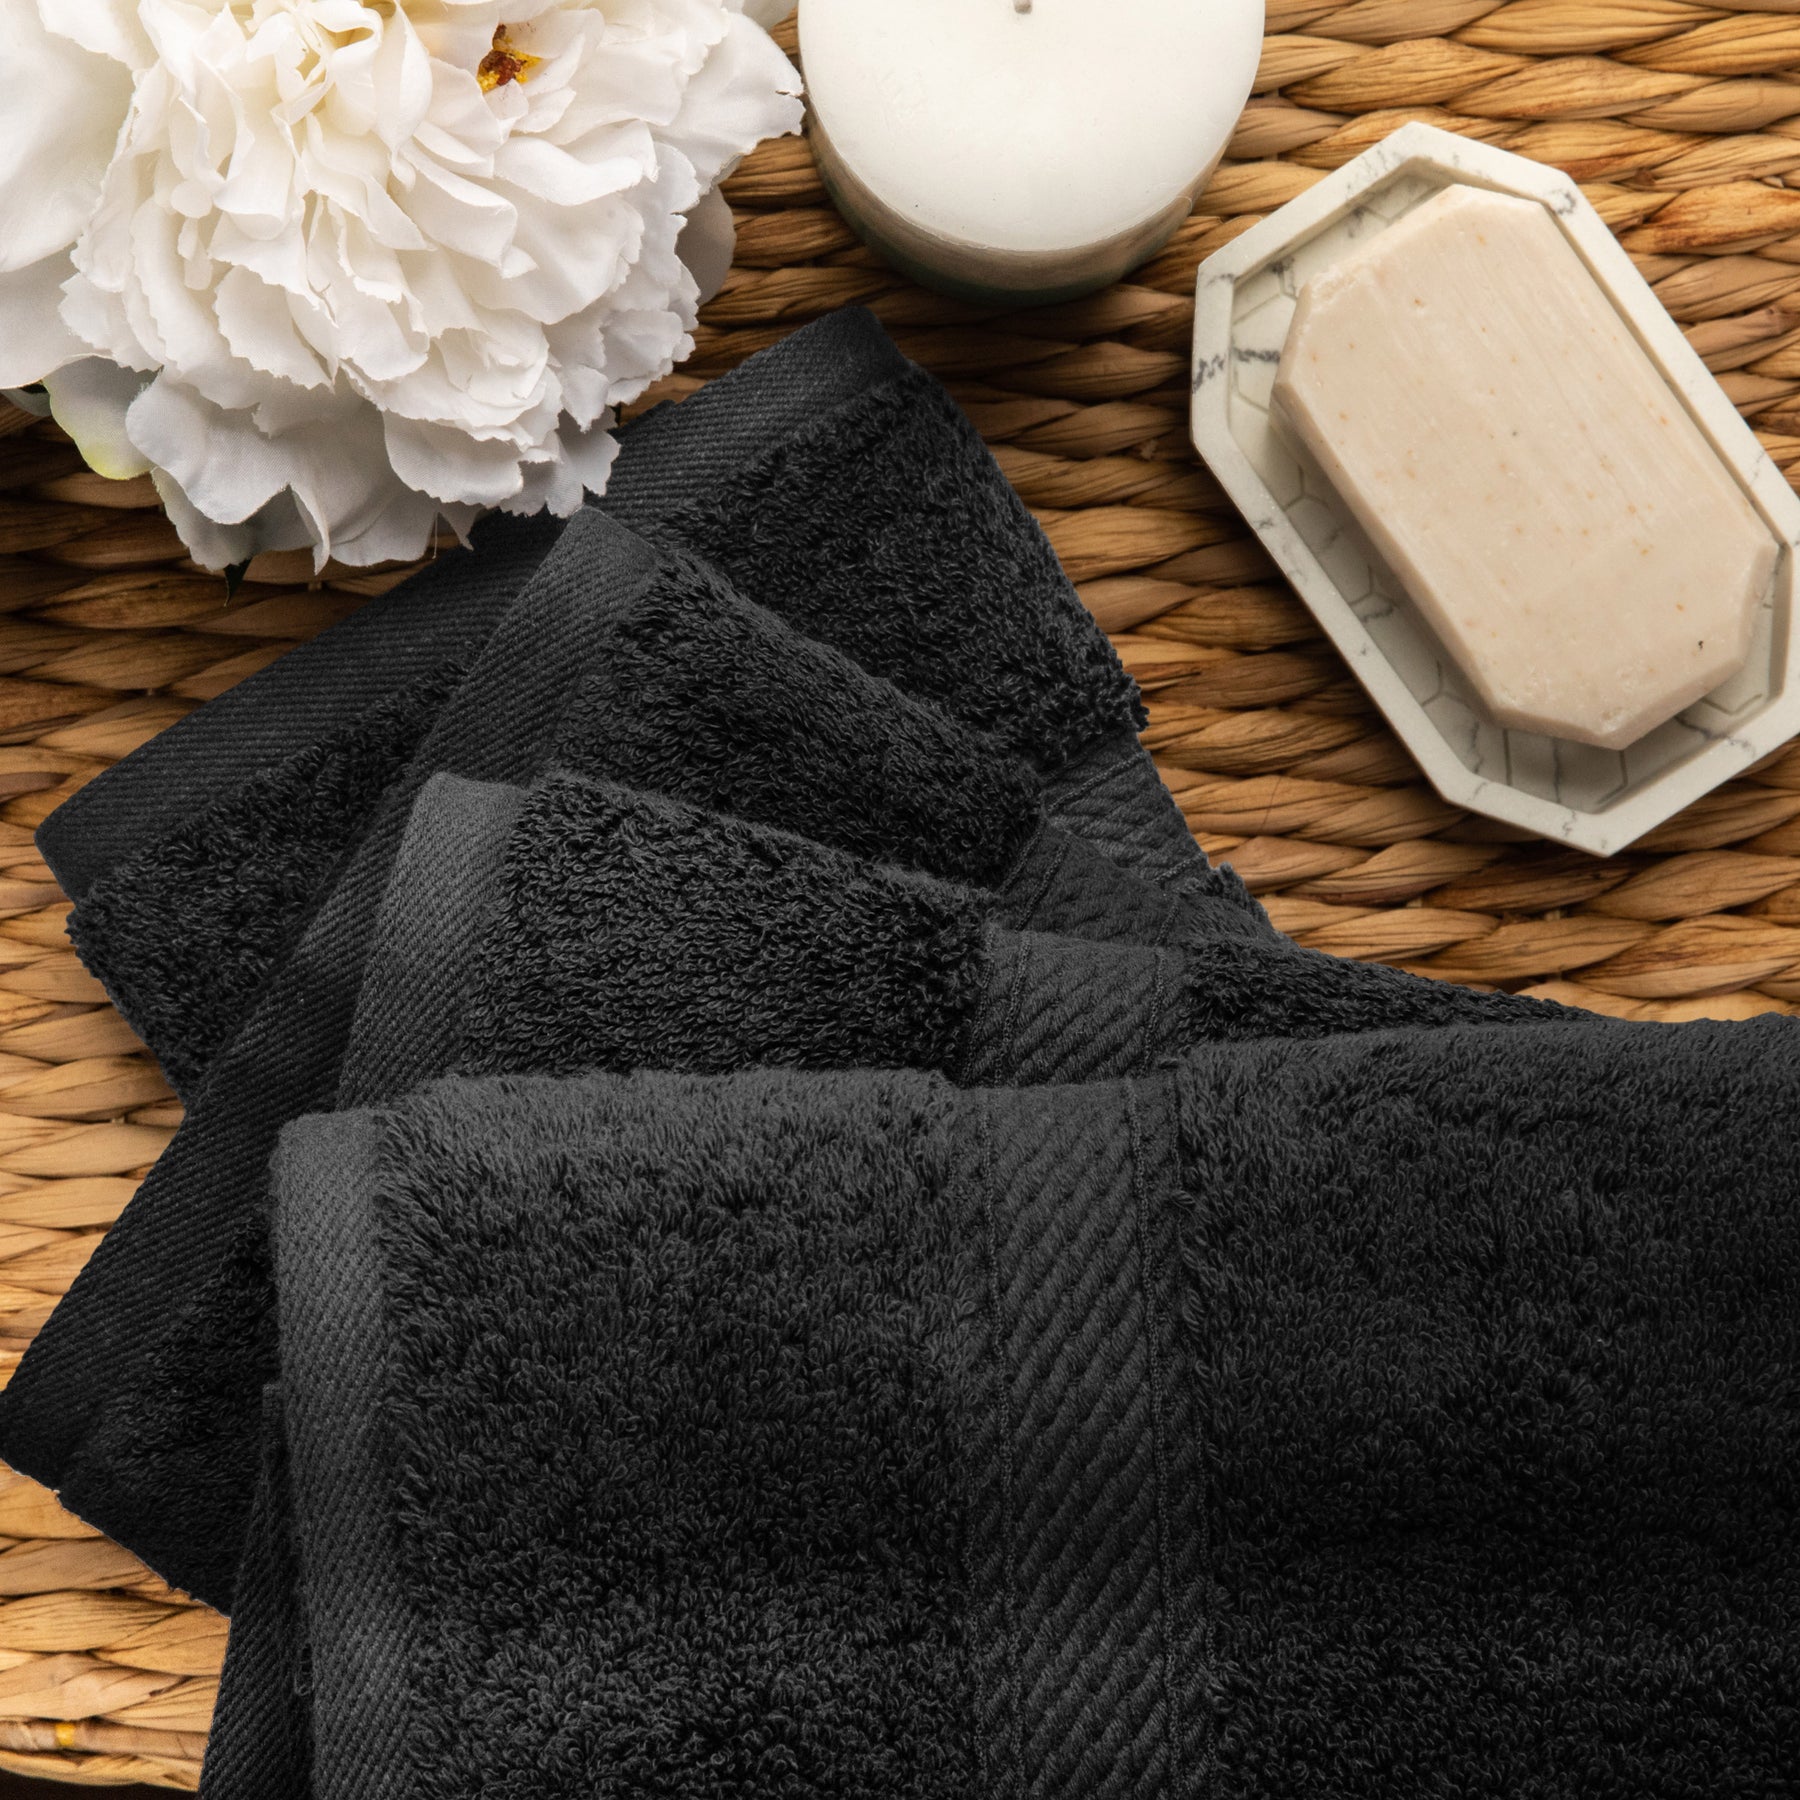 Solid Egyptian Cotton 4 Piece Hand Towel Set - Black